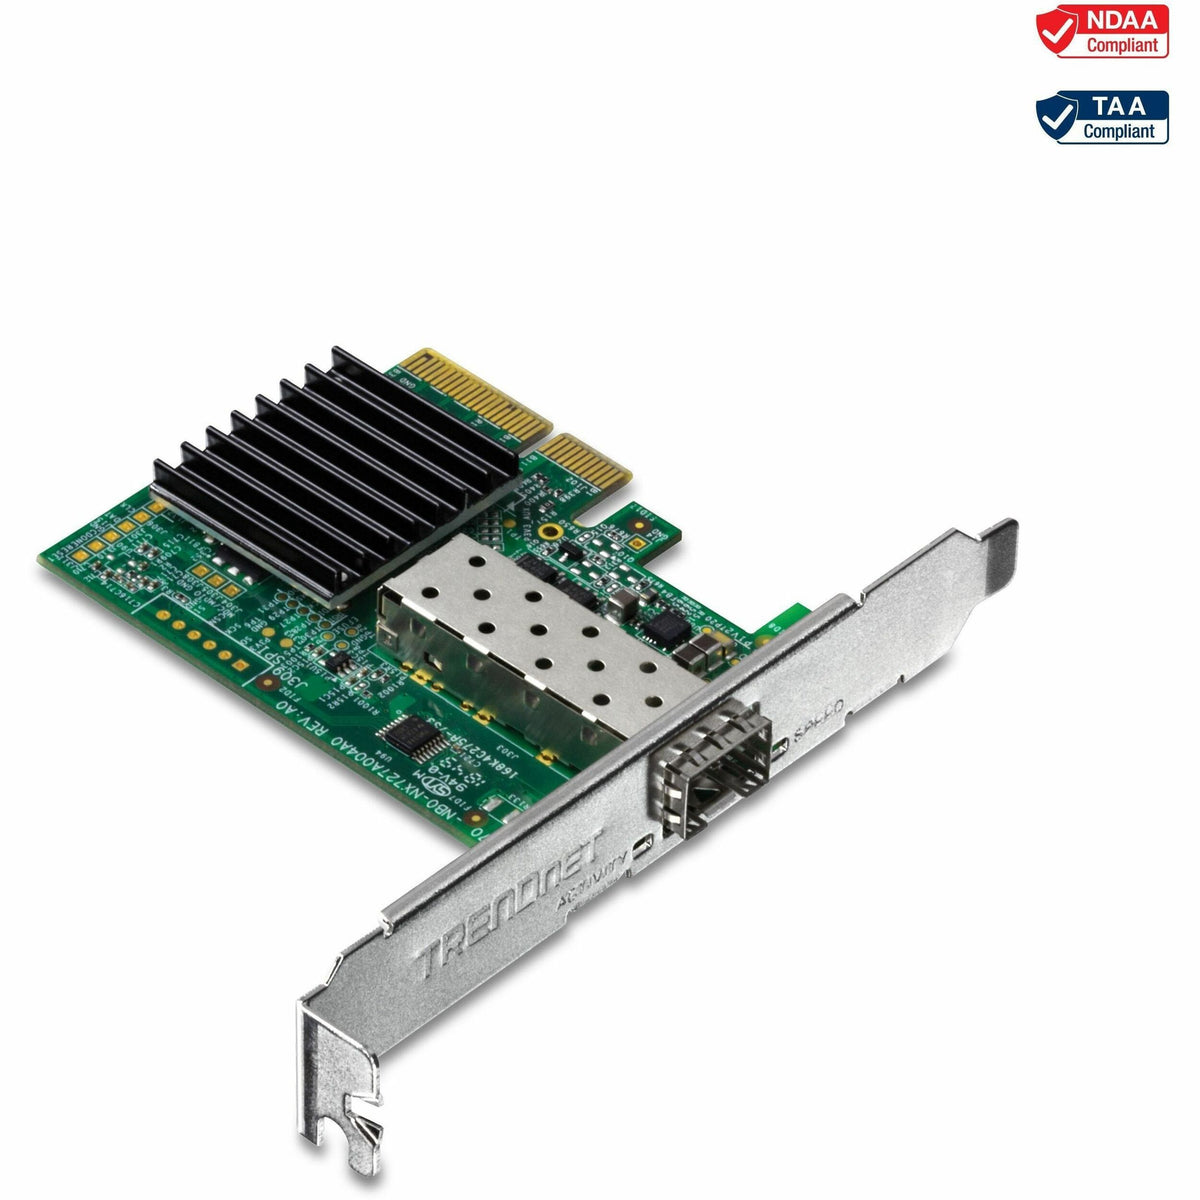 TRENDnet 10 Gigabit PCIe SFP+ Network Adapter, Convert A PCIe Slot Into A 10G SFP+ Slot, Supports 802.1Q, Standard & Low-Profile Brackets Included, Compatible With Windows & Linux, Black, TEG-10GECSFP - TEG-10GECSFP